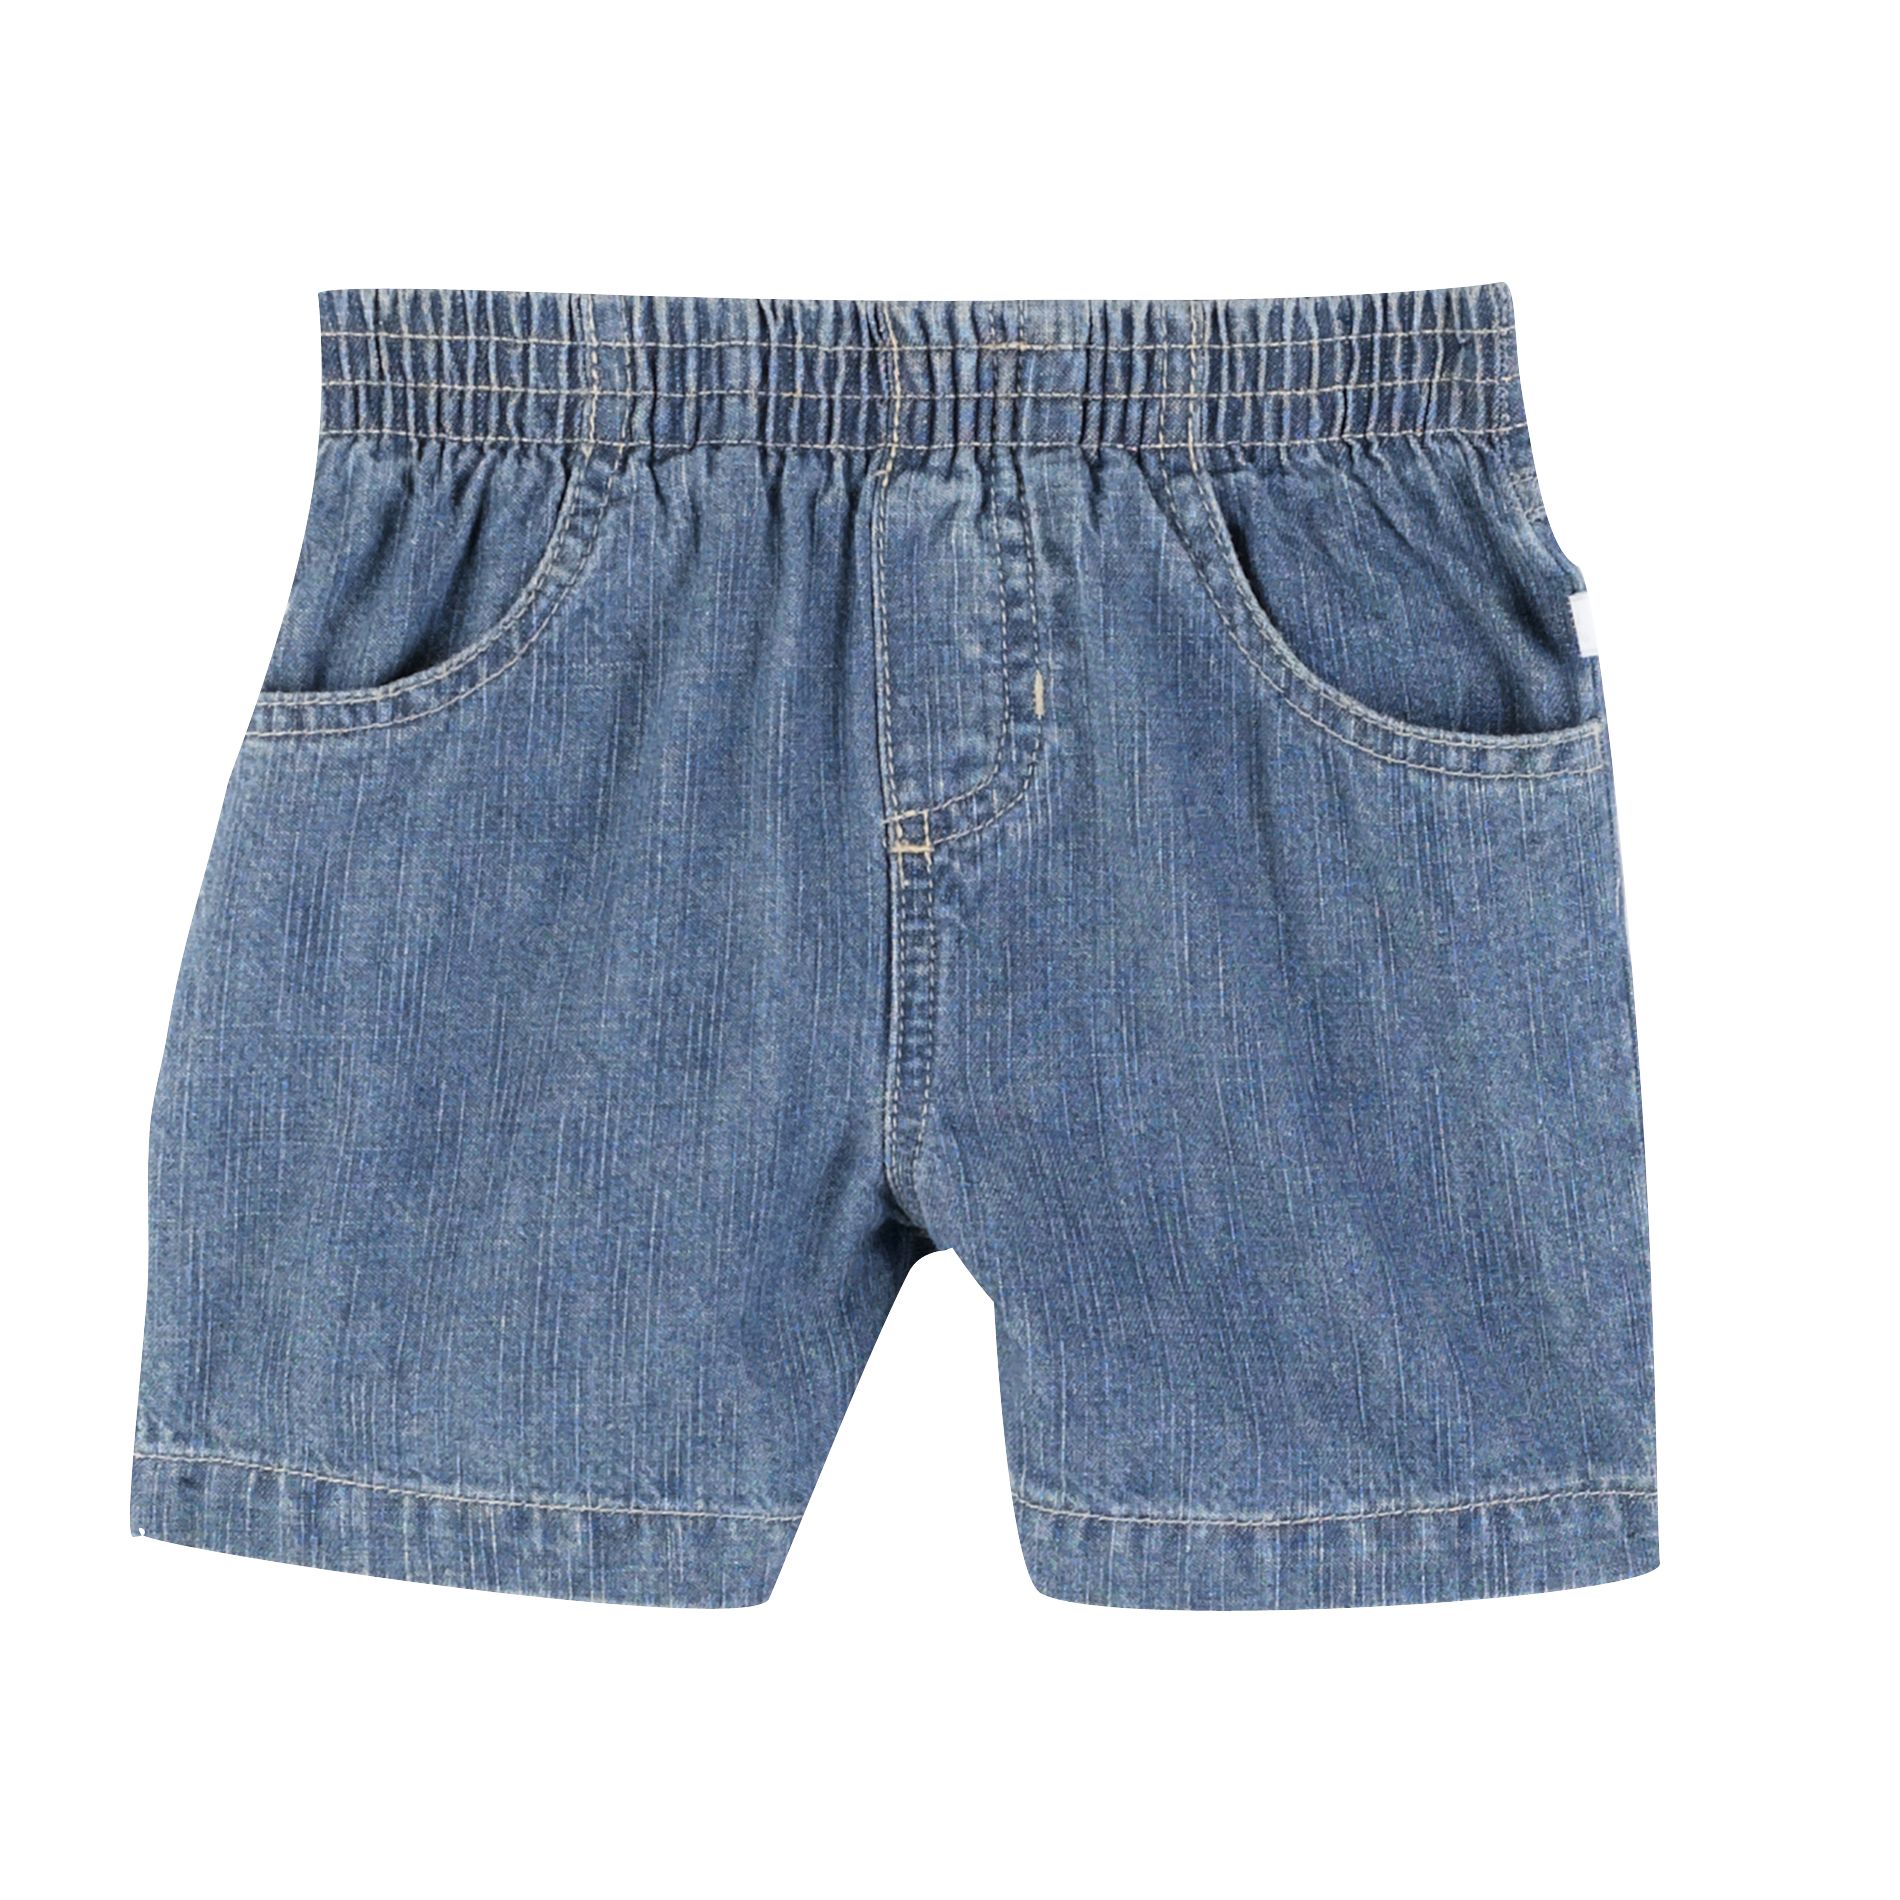 Small Wonders Newborn Boy's Elastic-Waist Denim Shorts